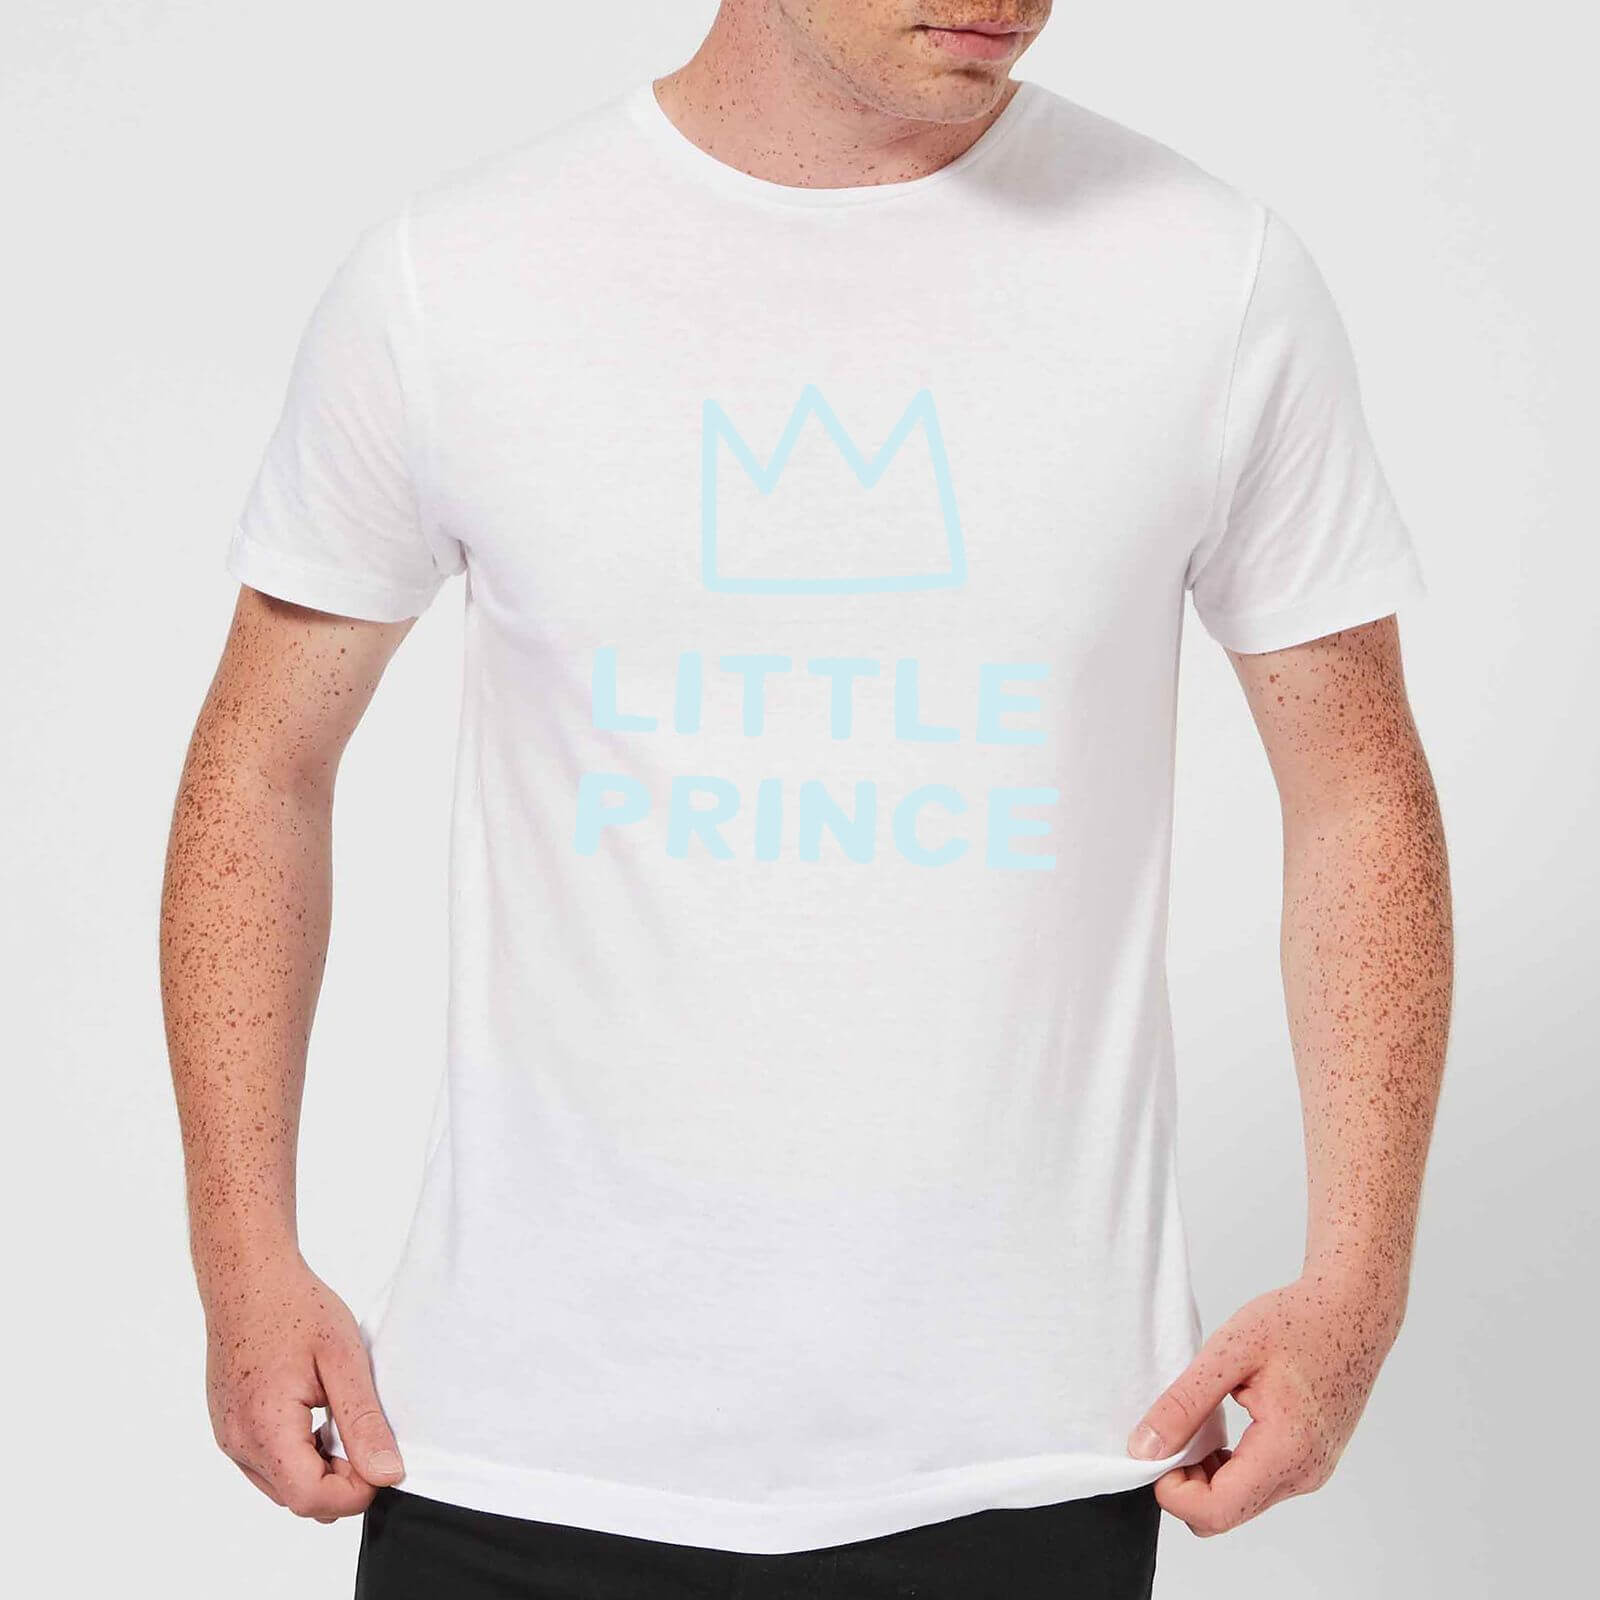 Little Prince Men's T-Shirt - White - S - White